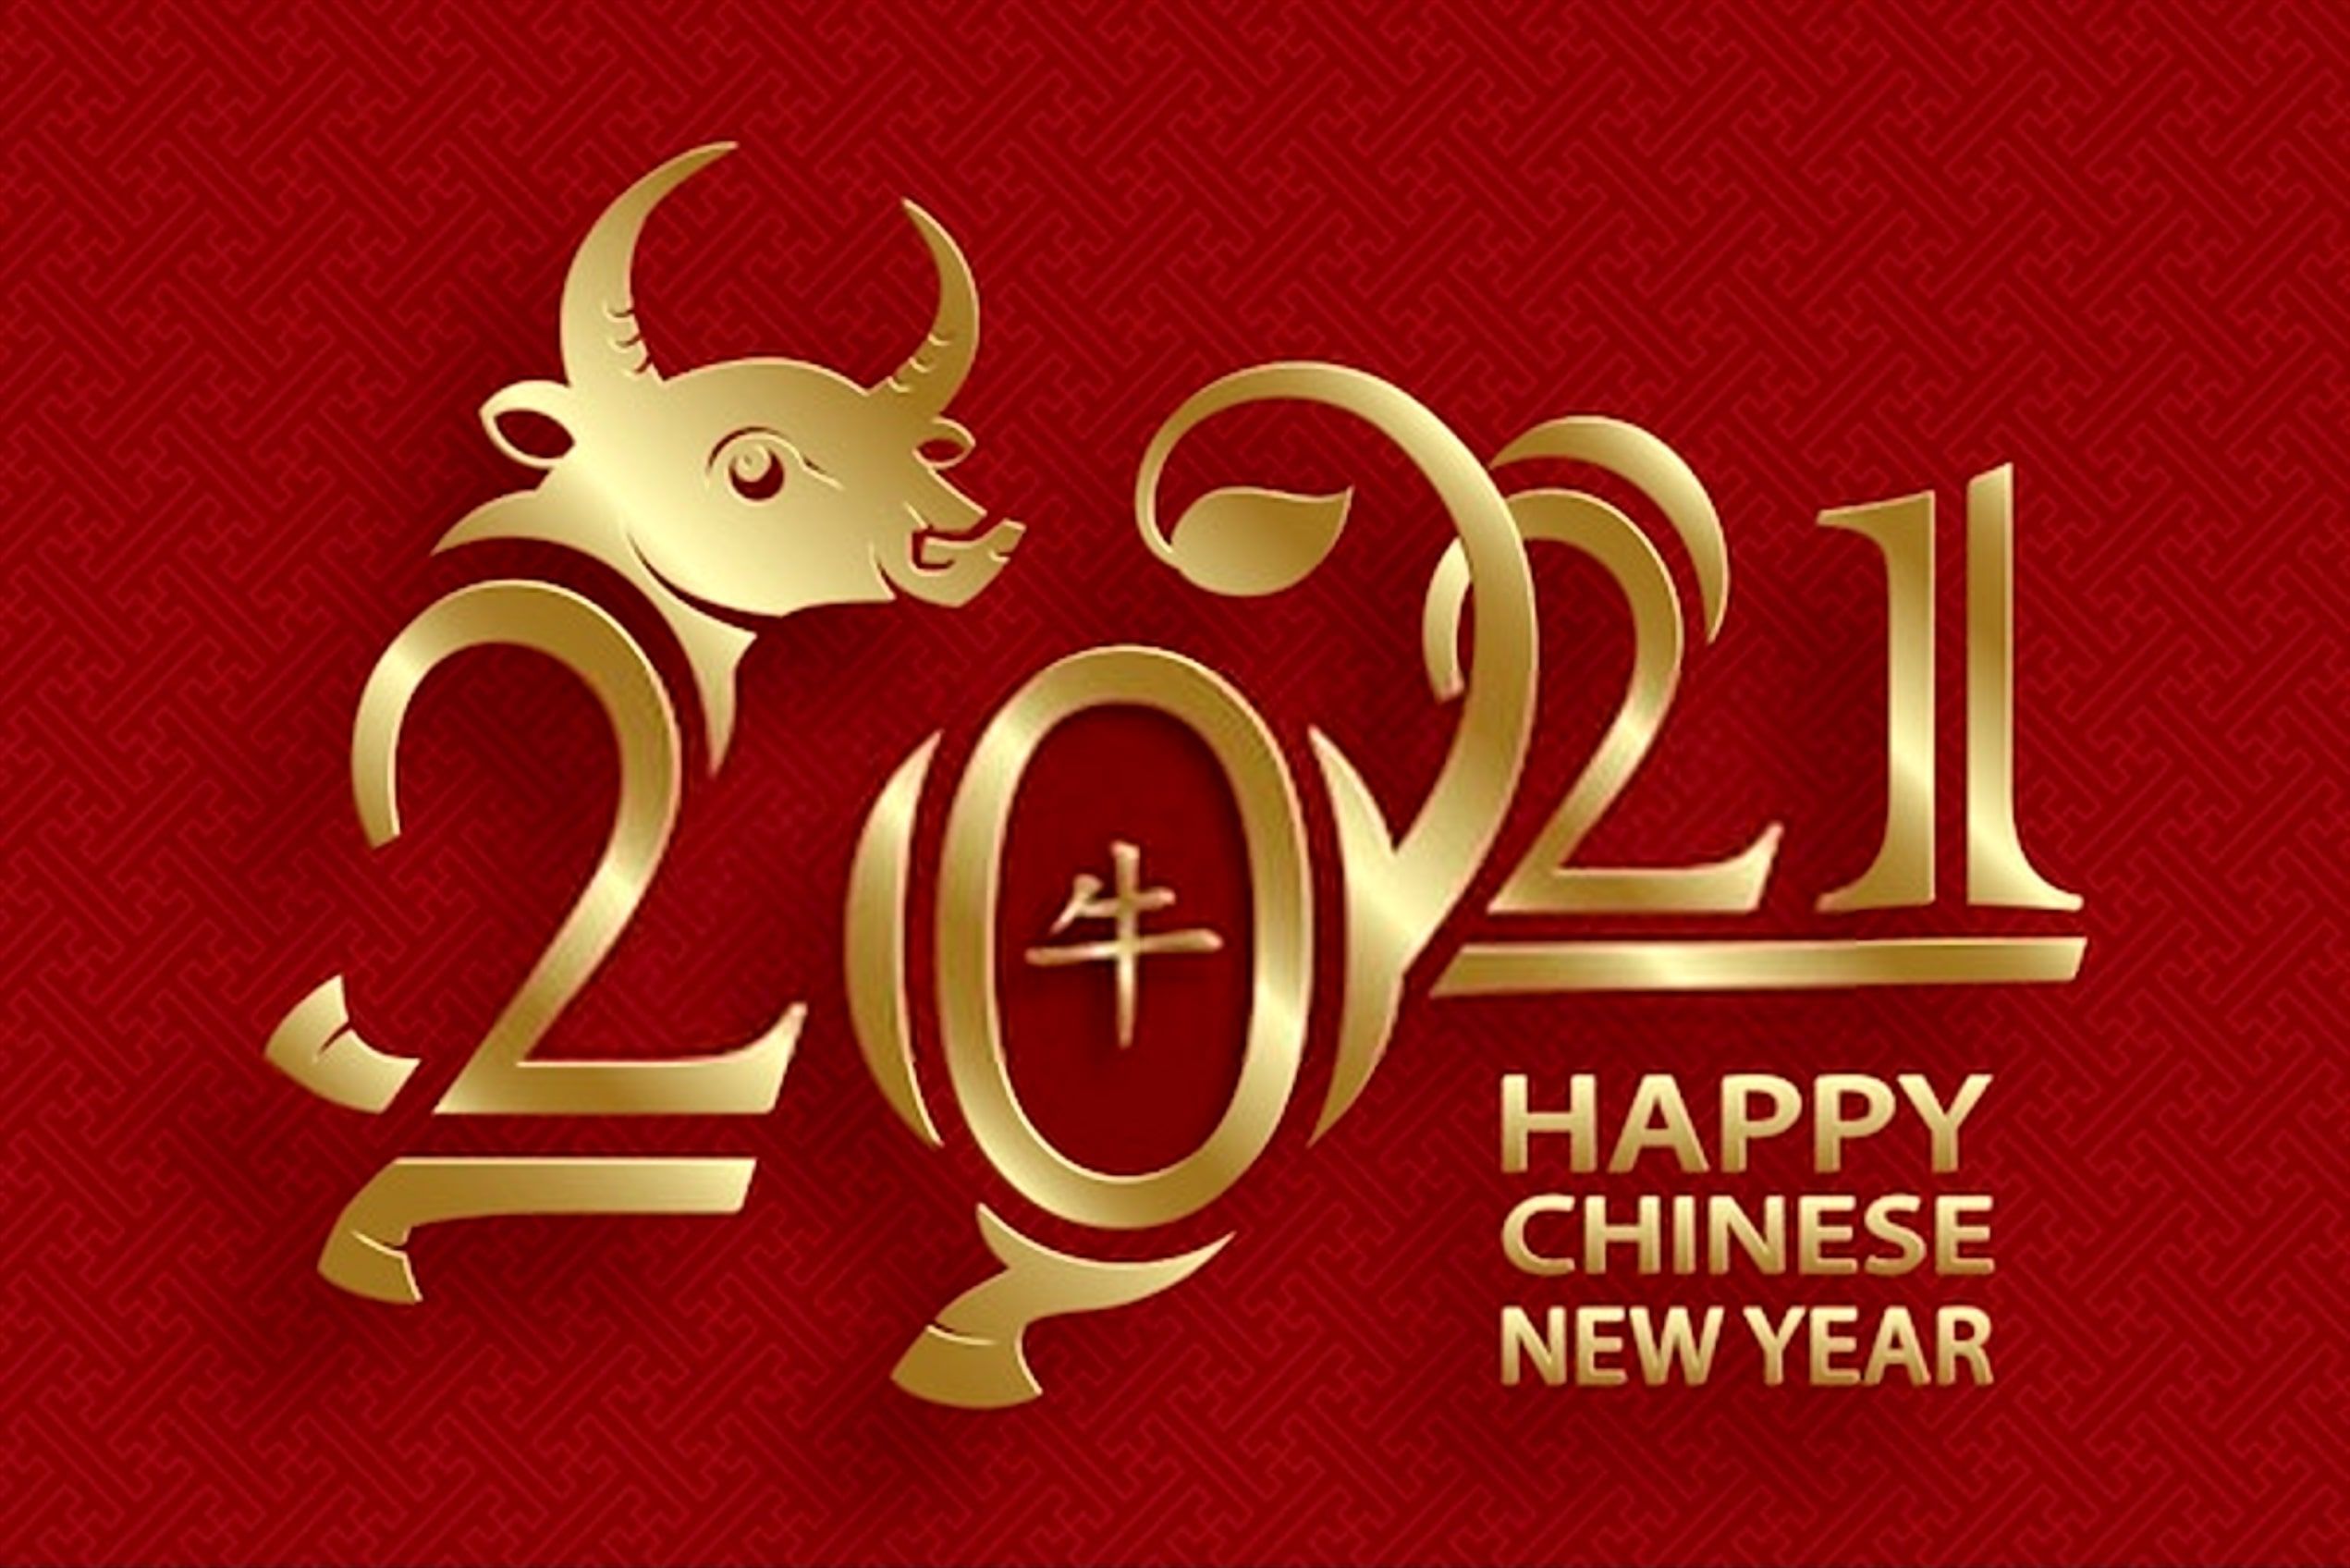 Happy Chinese New Year 2021 Image .com